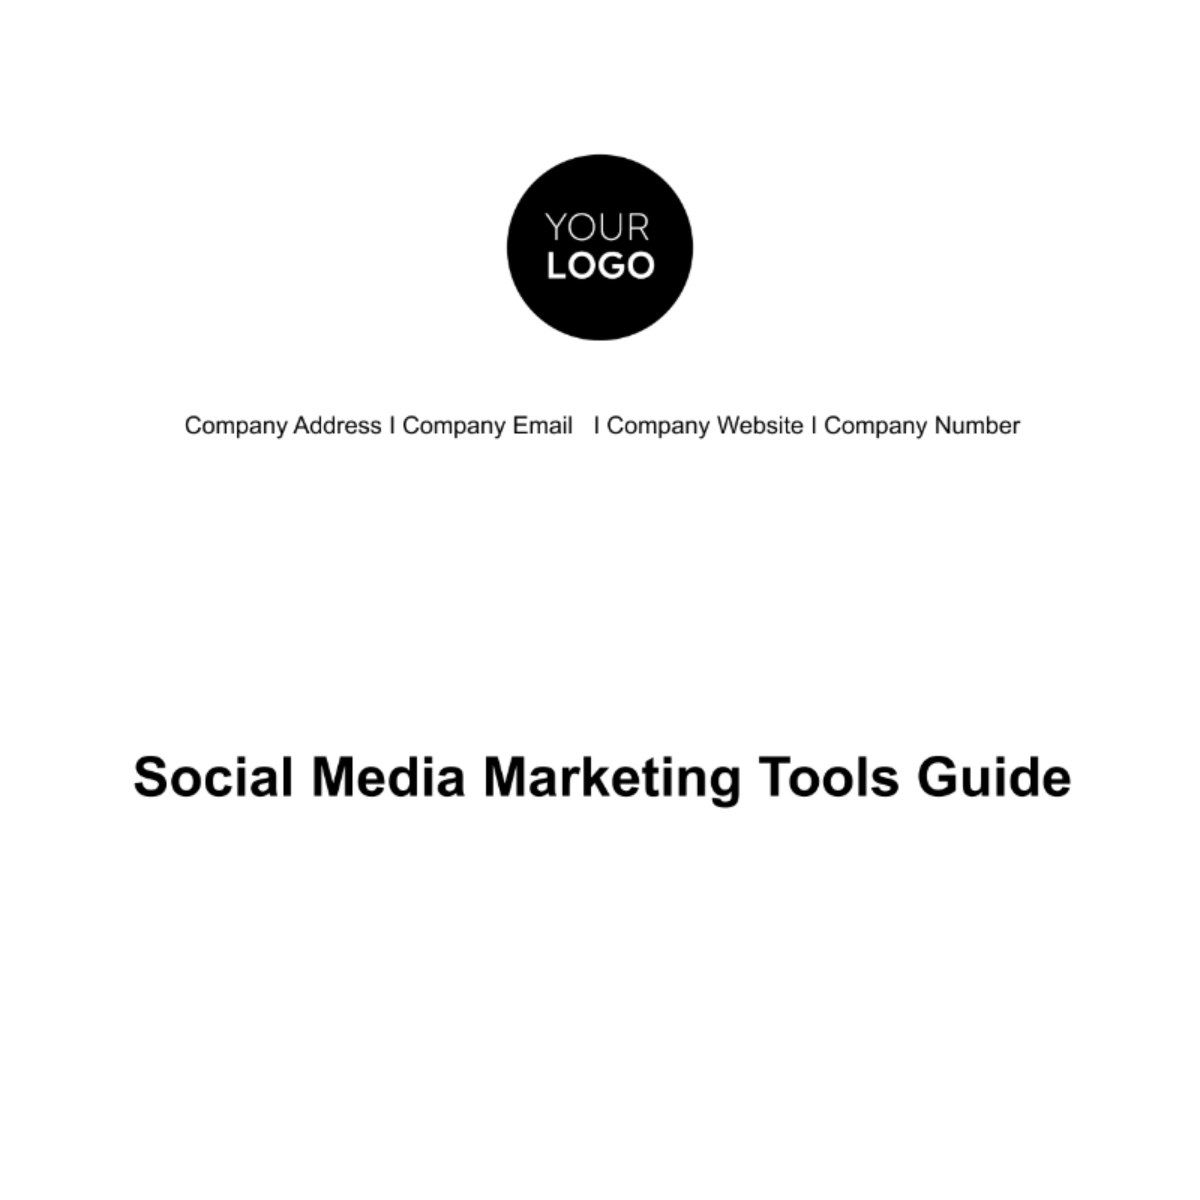 Social Media Marketing Tools Guide Template